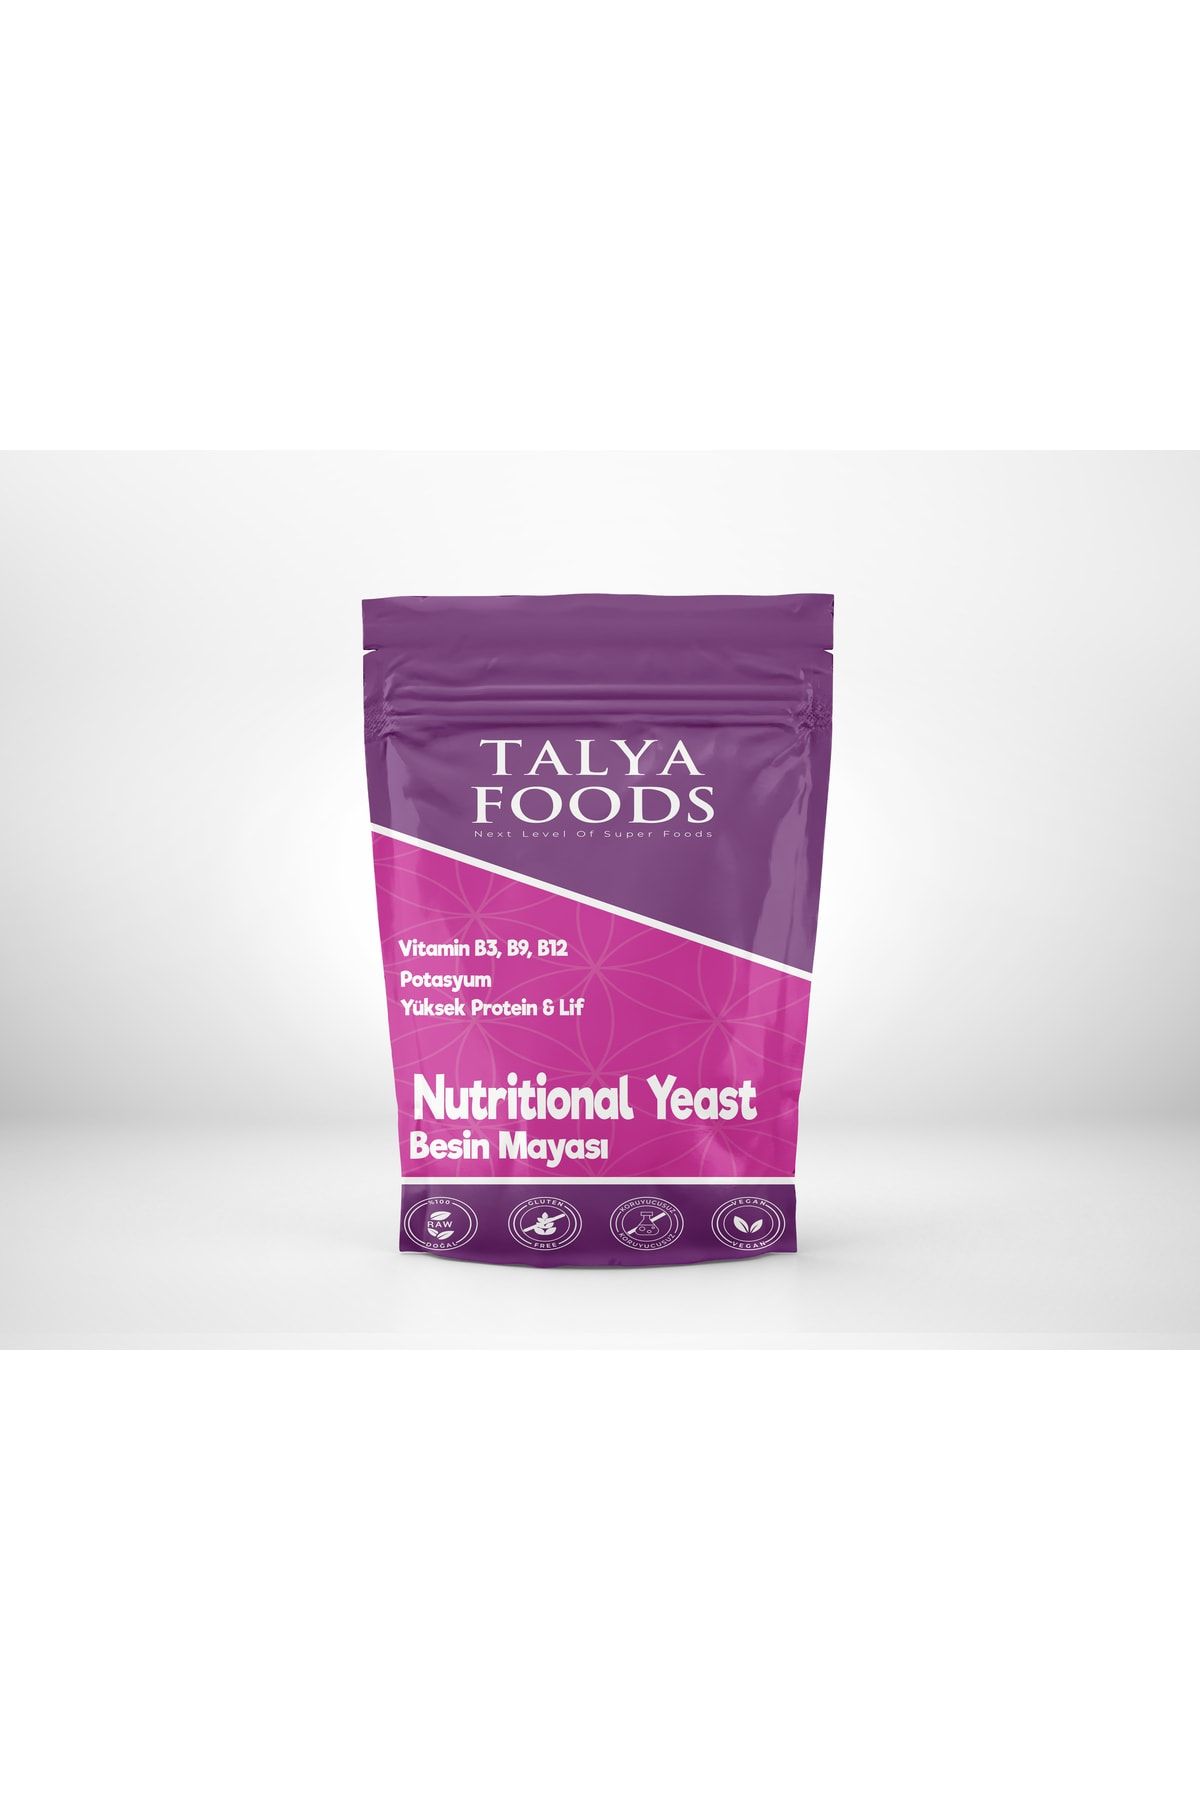 TALYA FOODS Nutritional Yeast